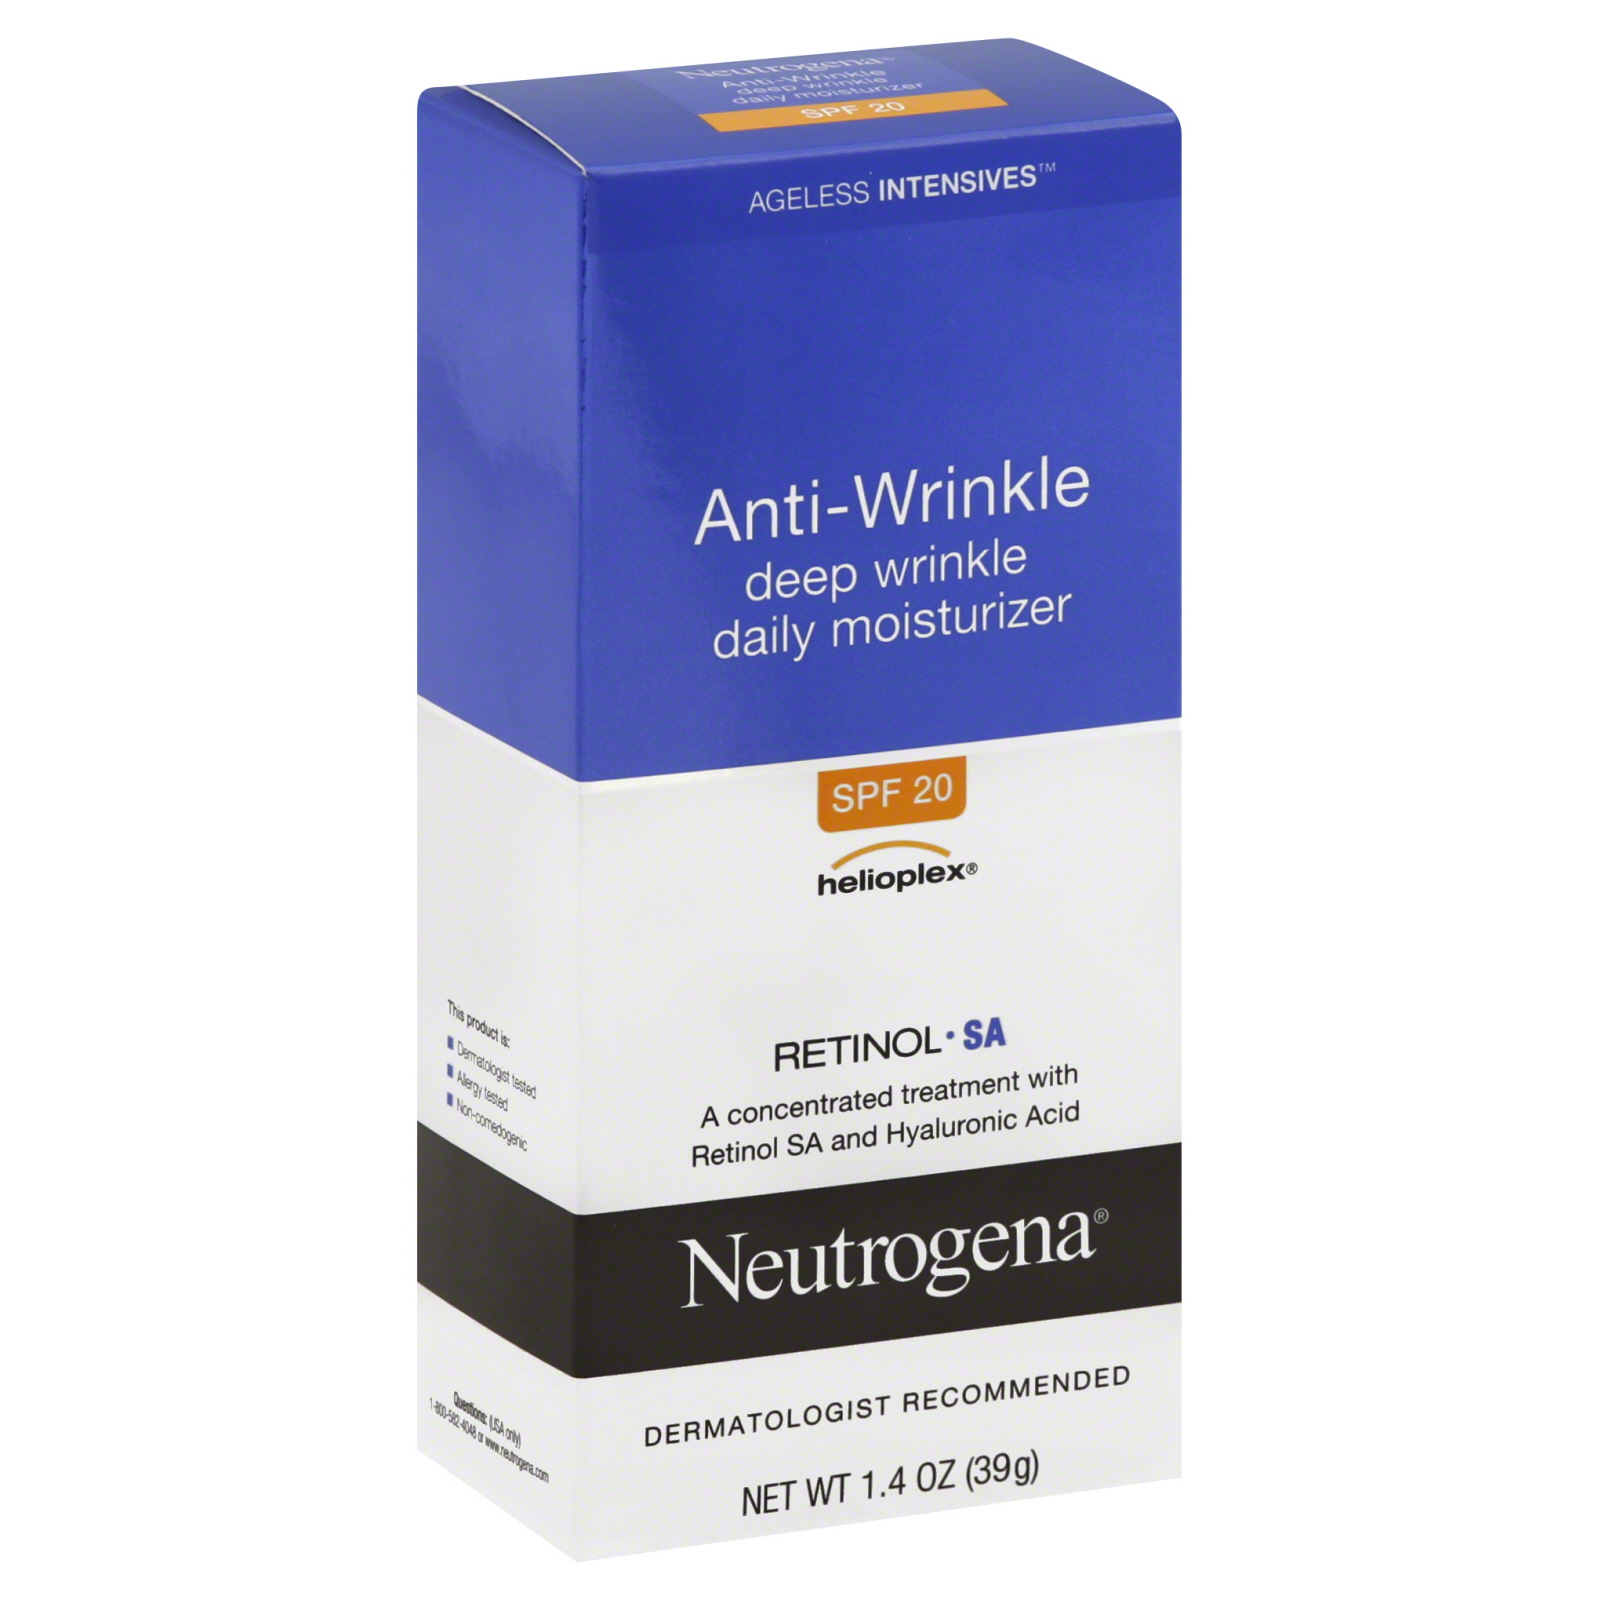 Neutrogena Ageless Intensives Anti-Wrinkle Daily Moisturizer, Deep Wrinkle, 1.4 oz (39 g)